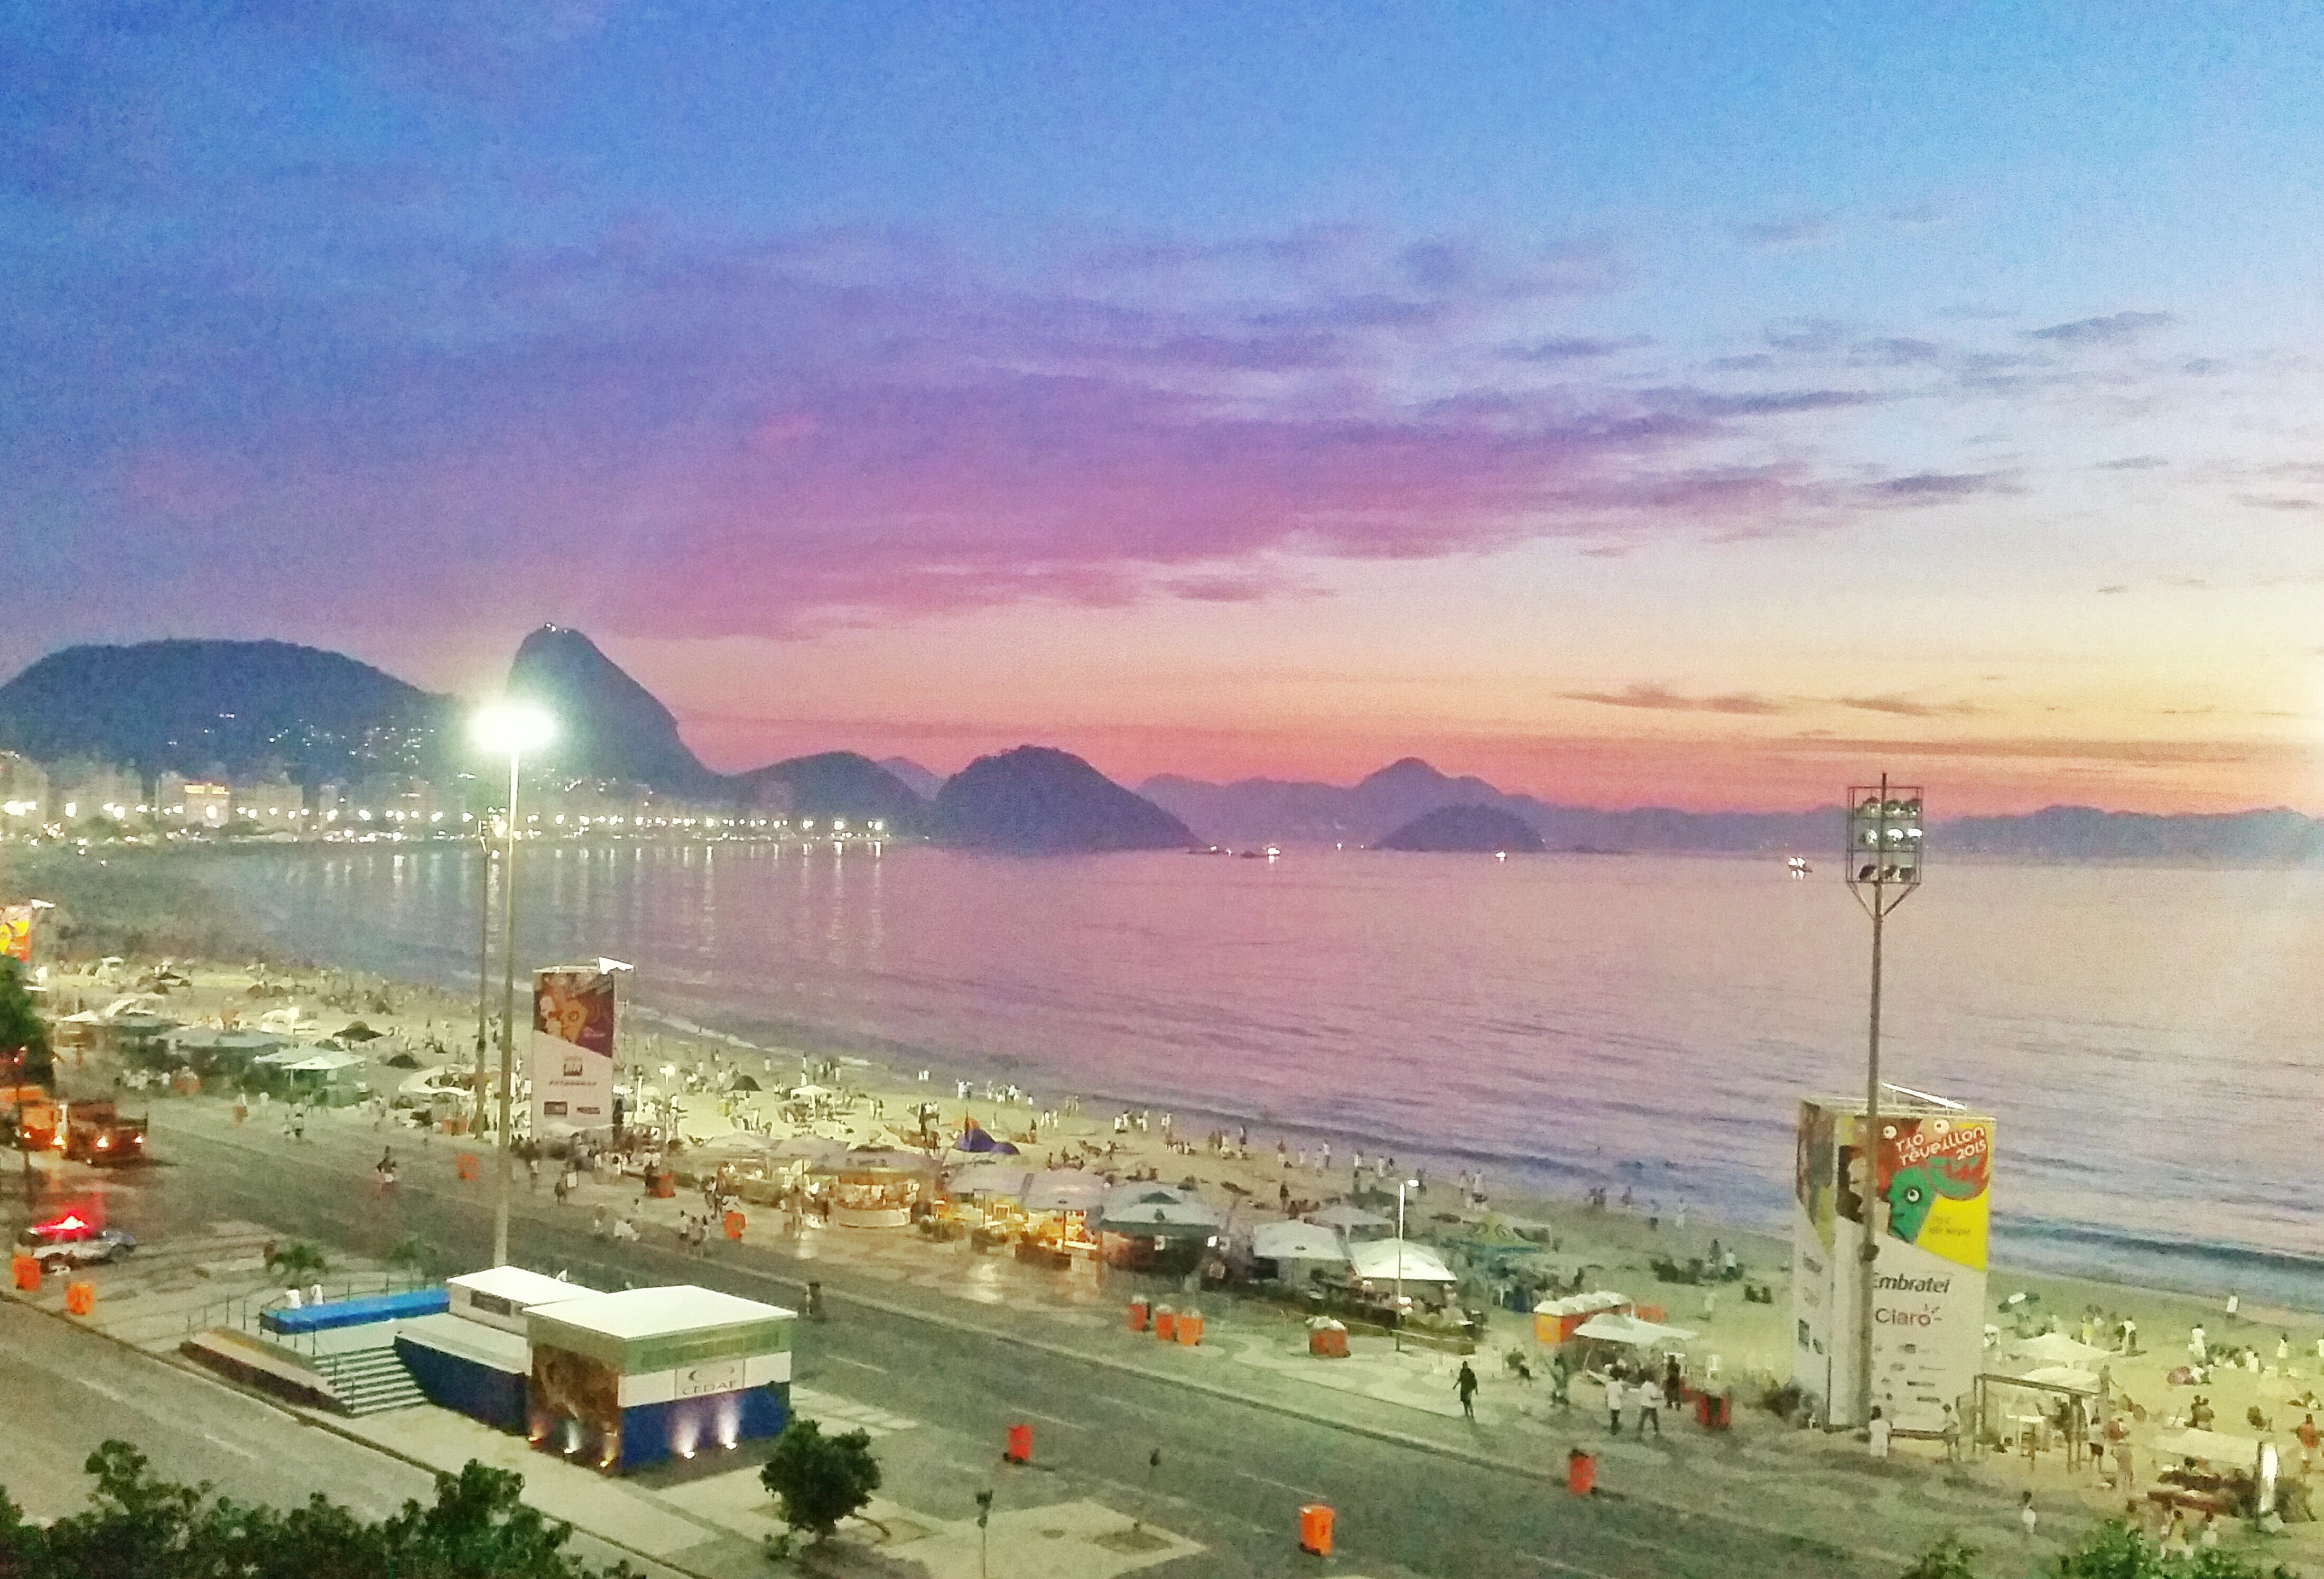 Sunrise at Copacabana beach